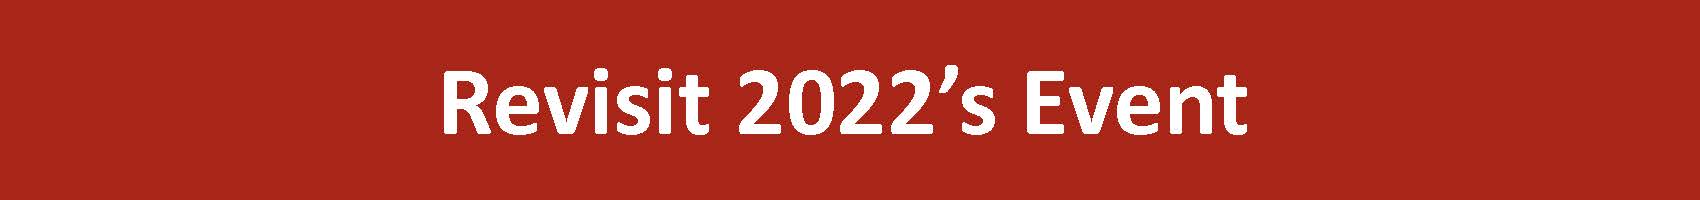 revisit 2022 - web banner